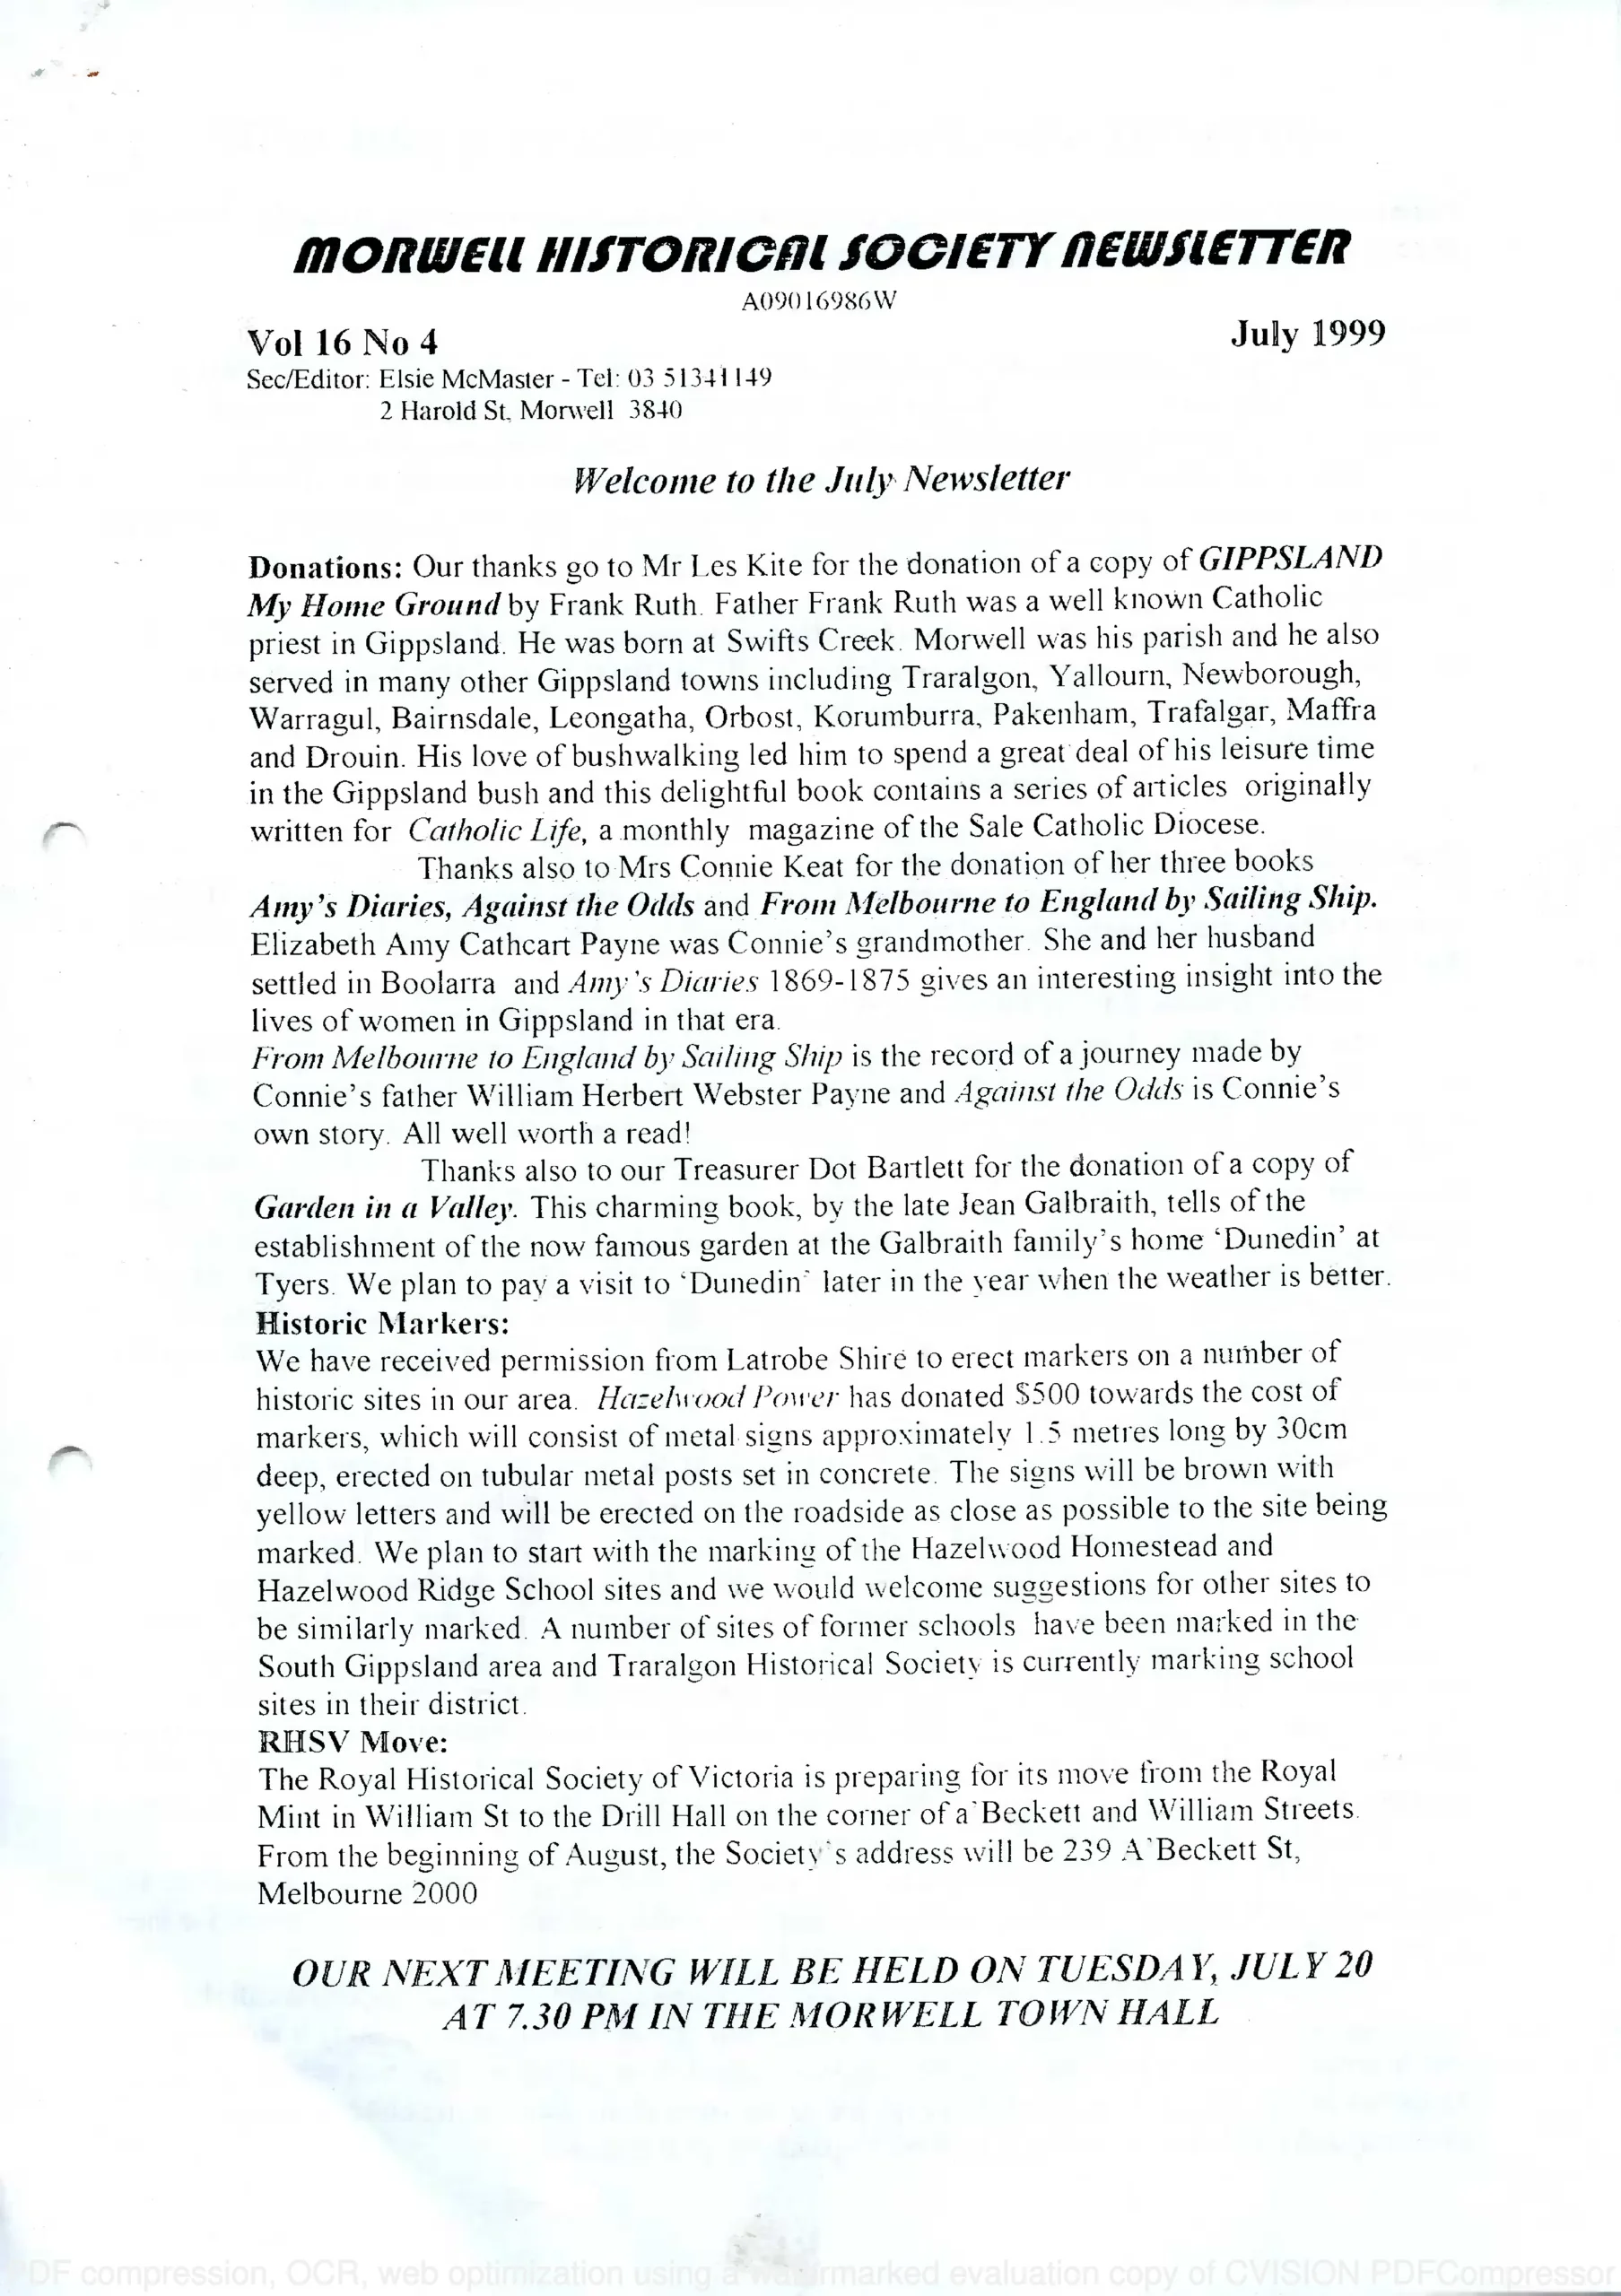 Newsletter July 1999